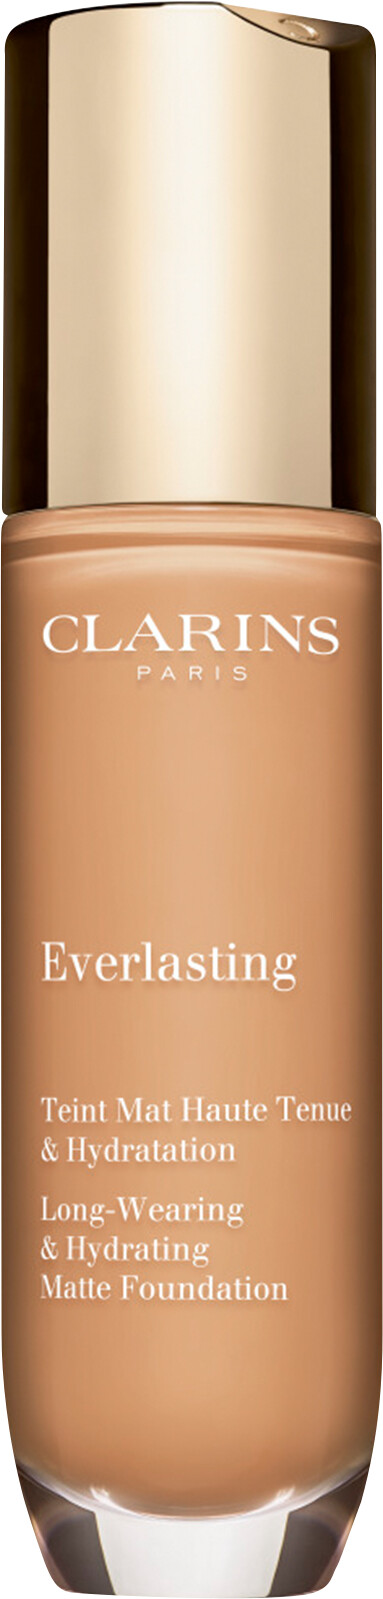 Clarins Everlasting Long-Wearing & Hydrating Matte Foundation 30ml 108.5W - Cashew